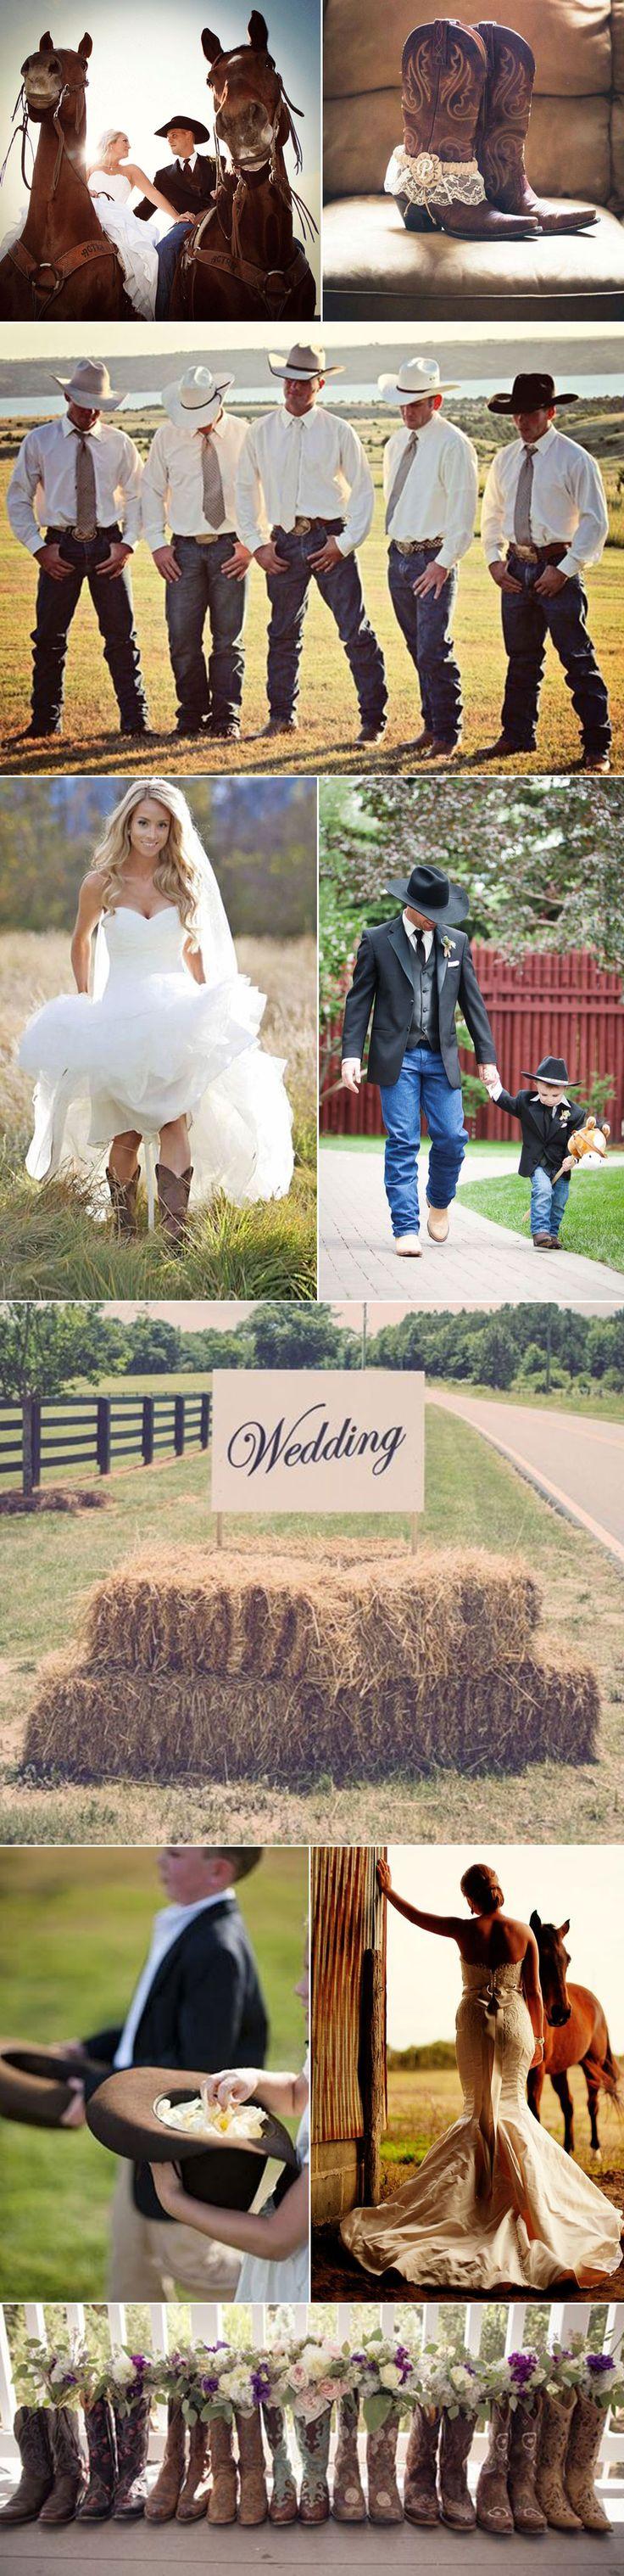 زفاف - Inspiration For Country Western Weddings   